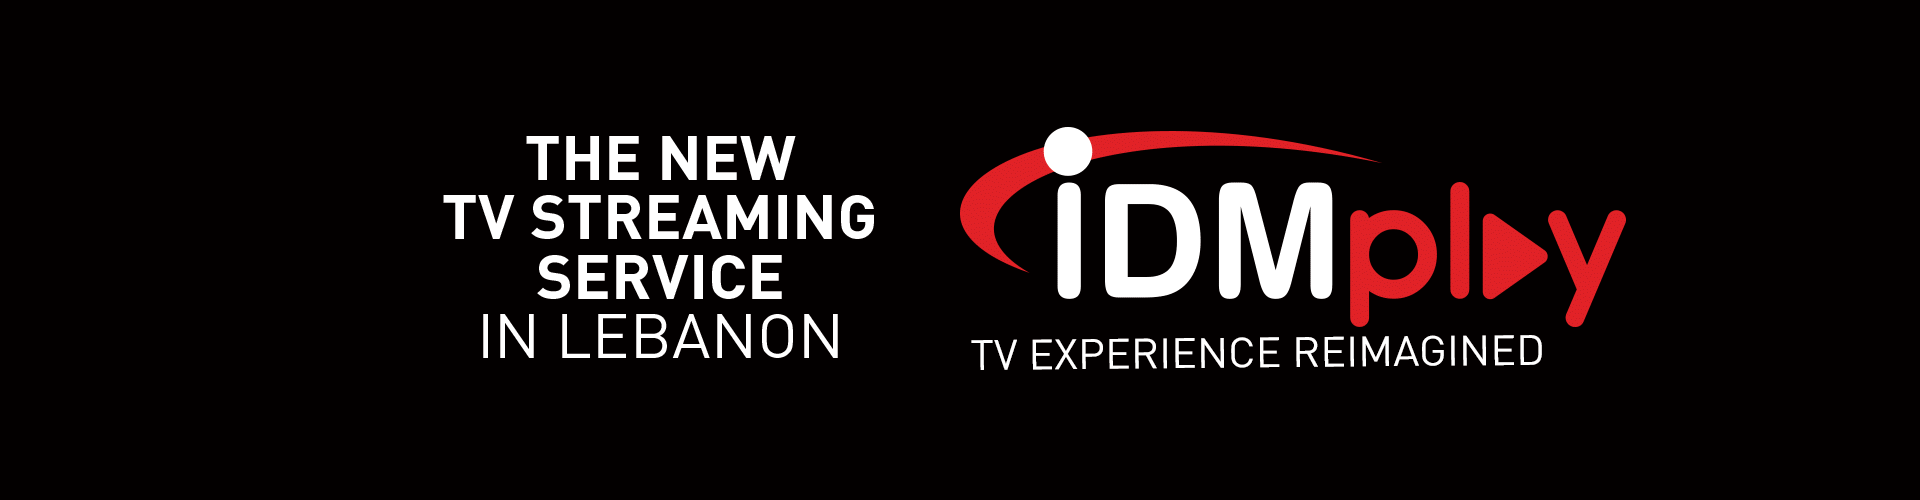 IDMplay: TV EXPERIENCE REIMAGINED